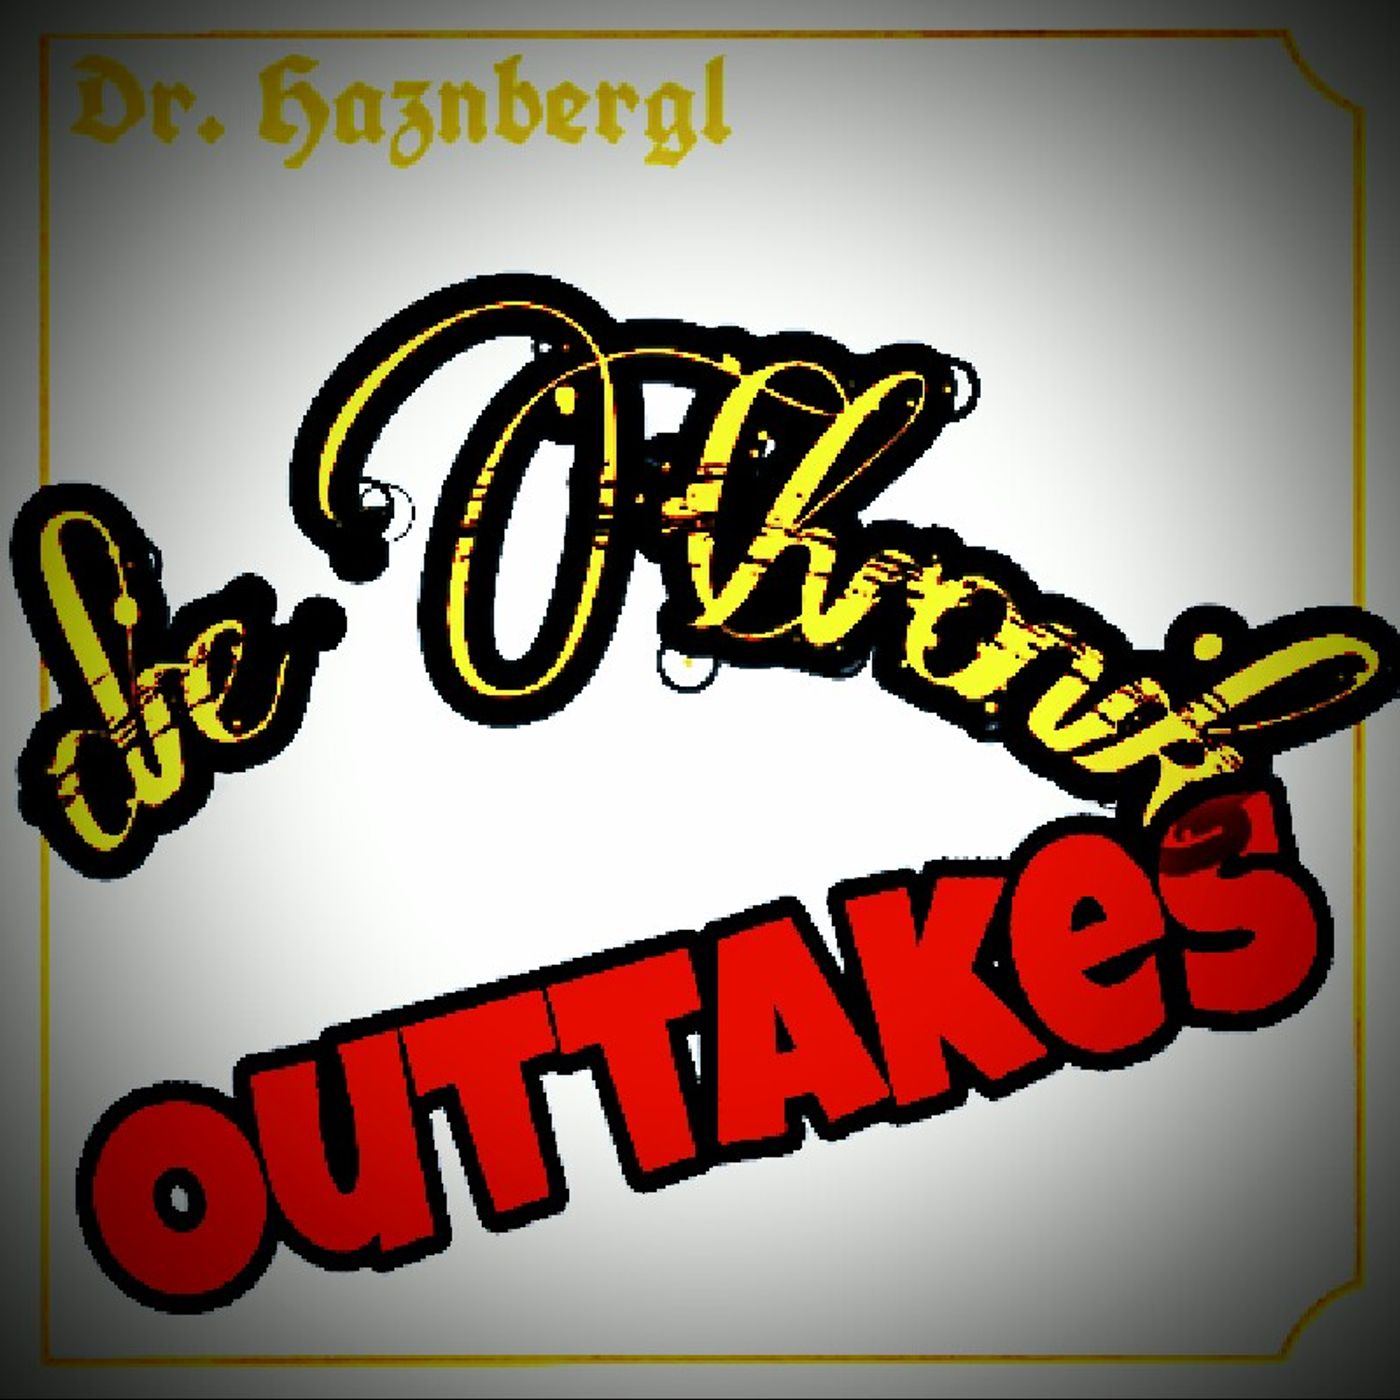 ALBUM OUTTAKE - Dr. Haznbergl „Oldsh8l classiX mashUp“ (McRough Beat)